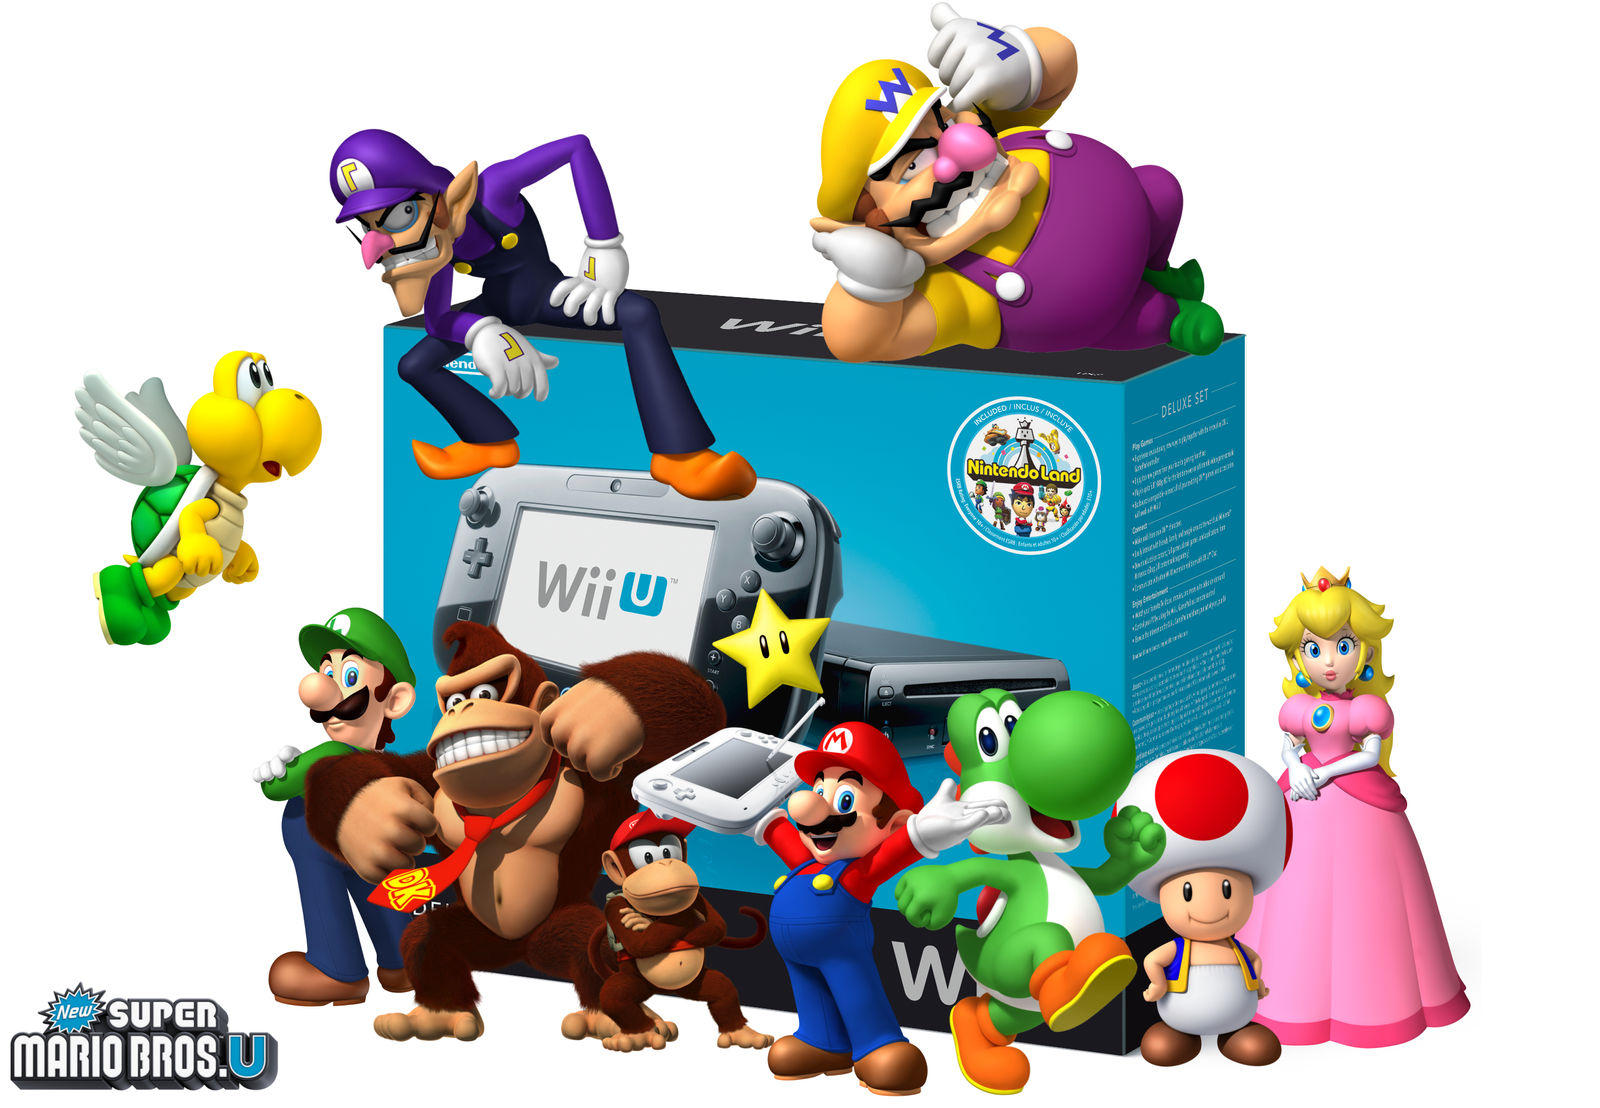 Nintendo New Super Mario Bros. U (Wii U)